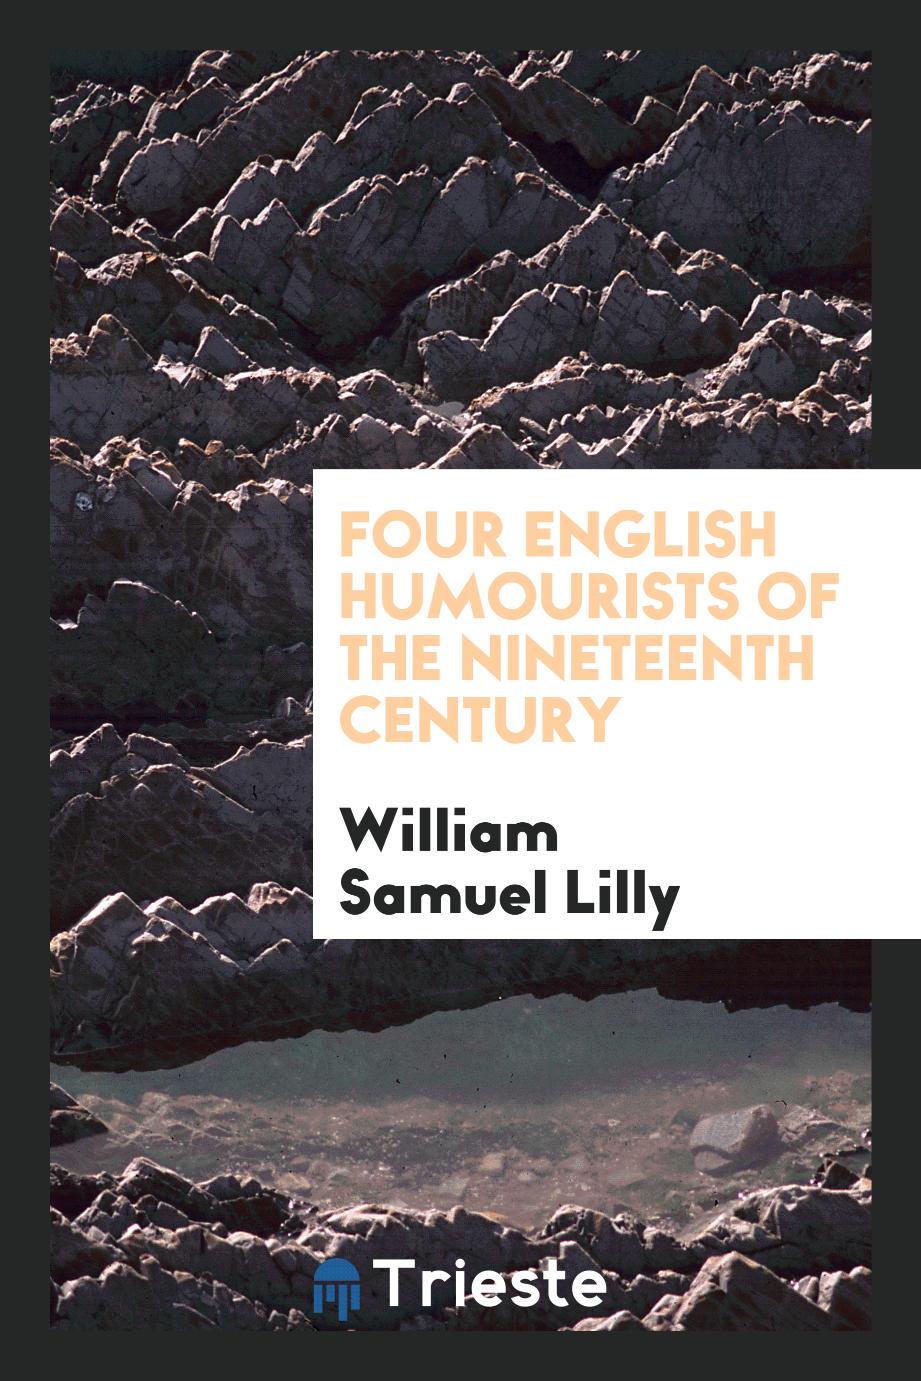 Four English humourists of the nineteenth century